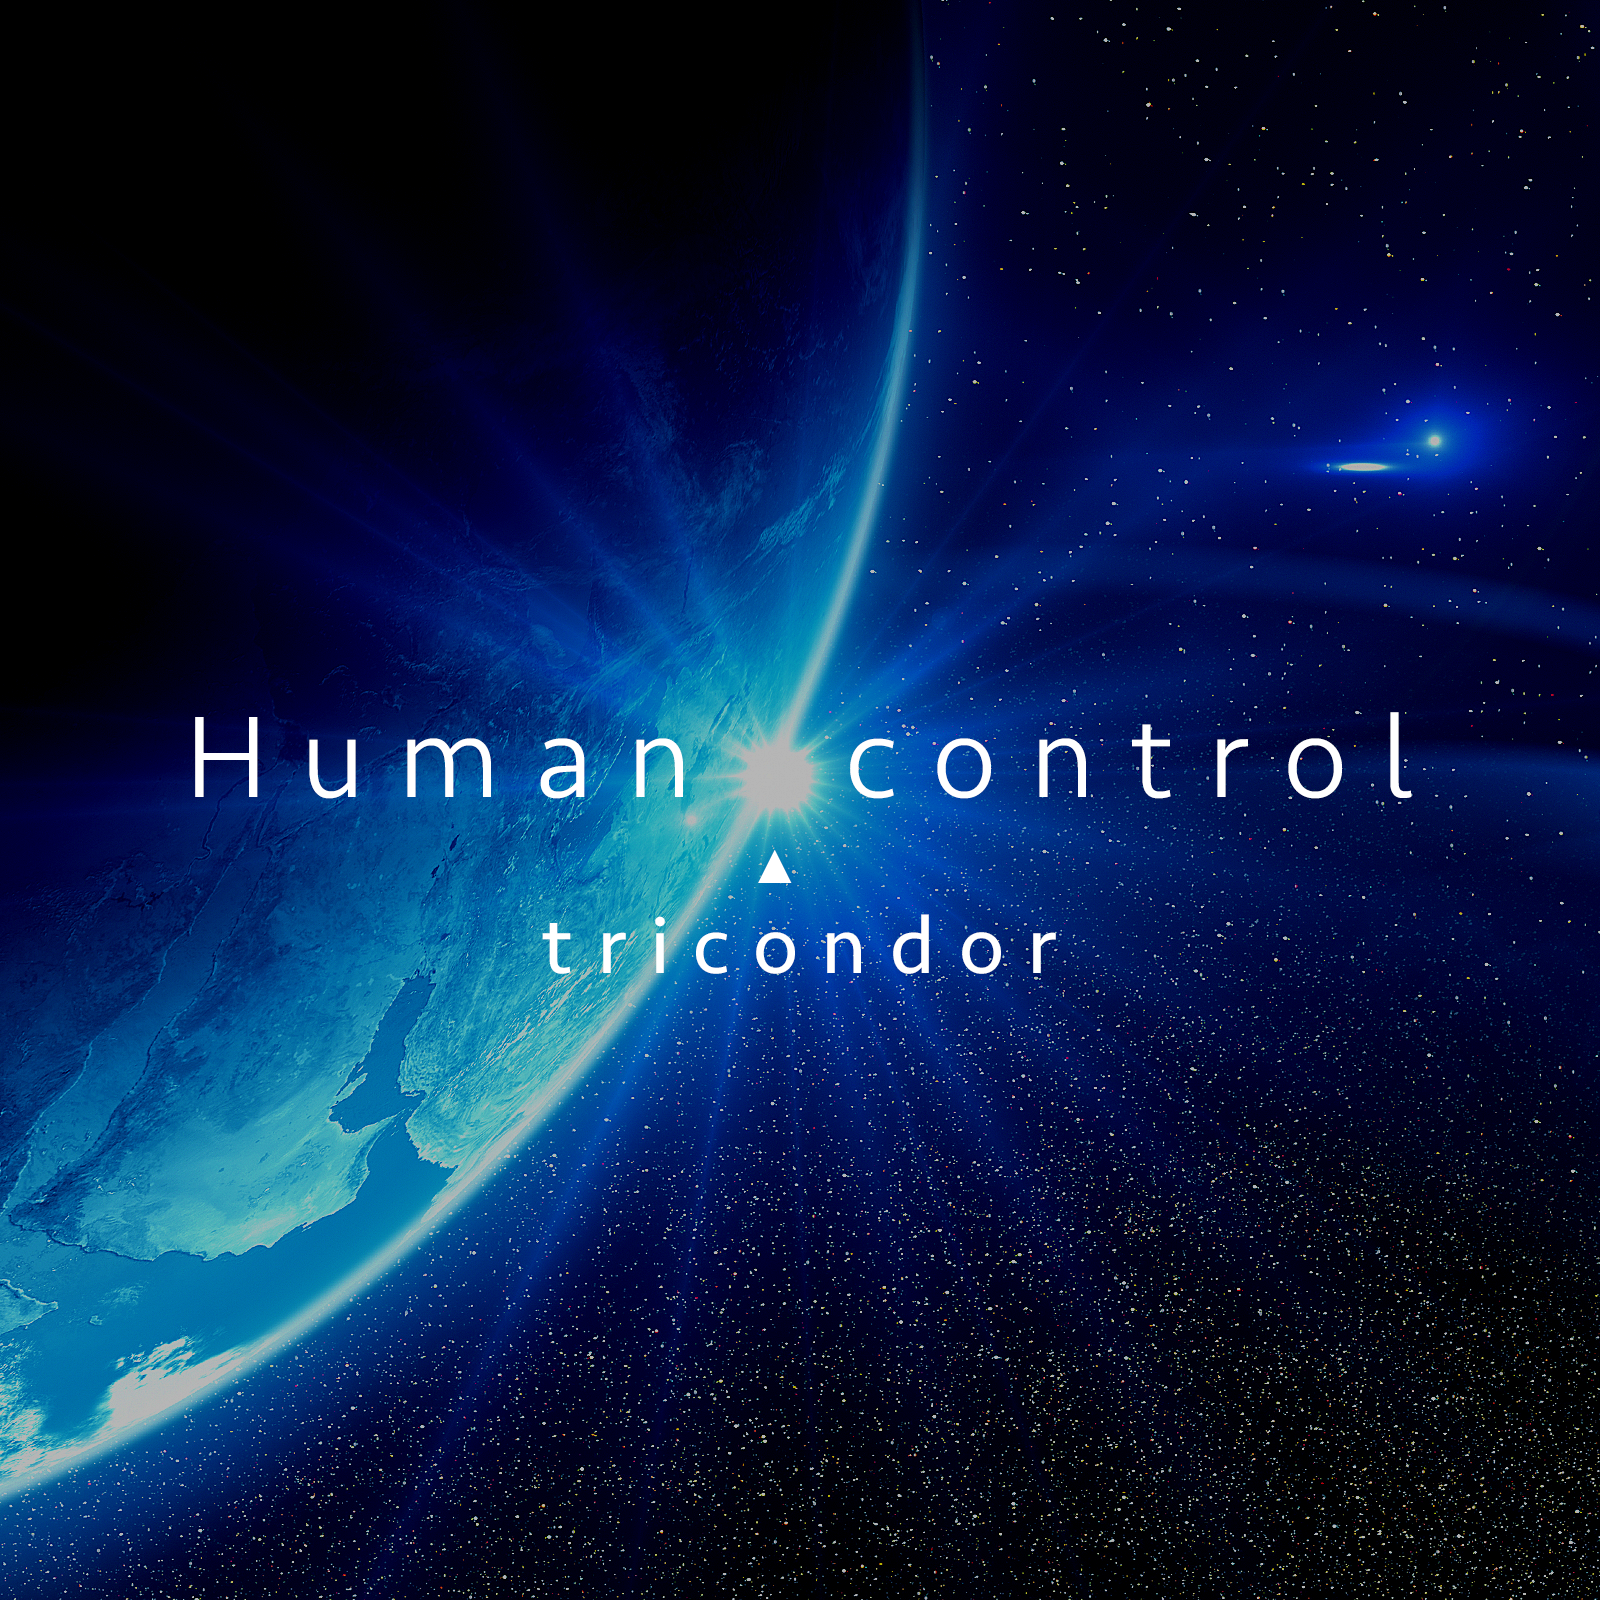 Human control